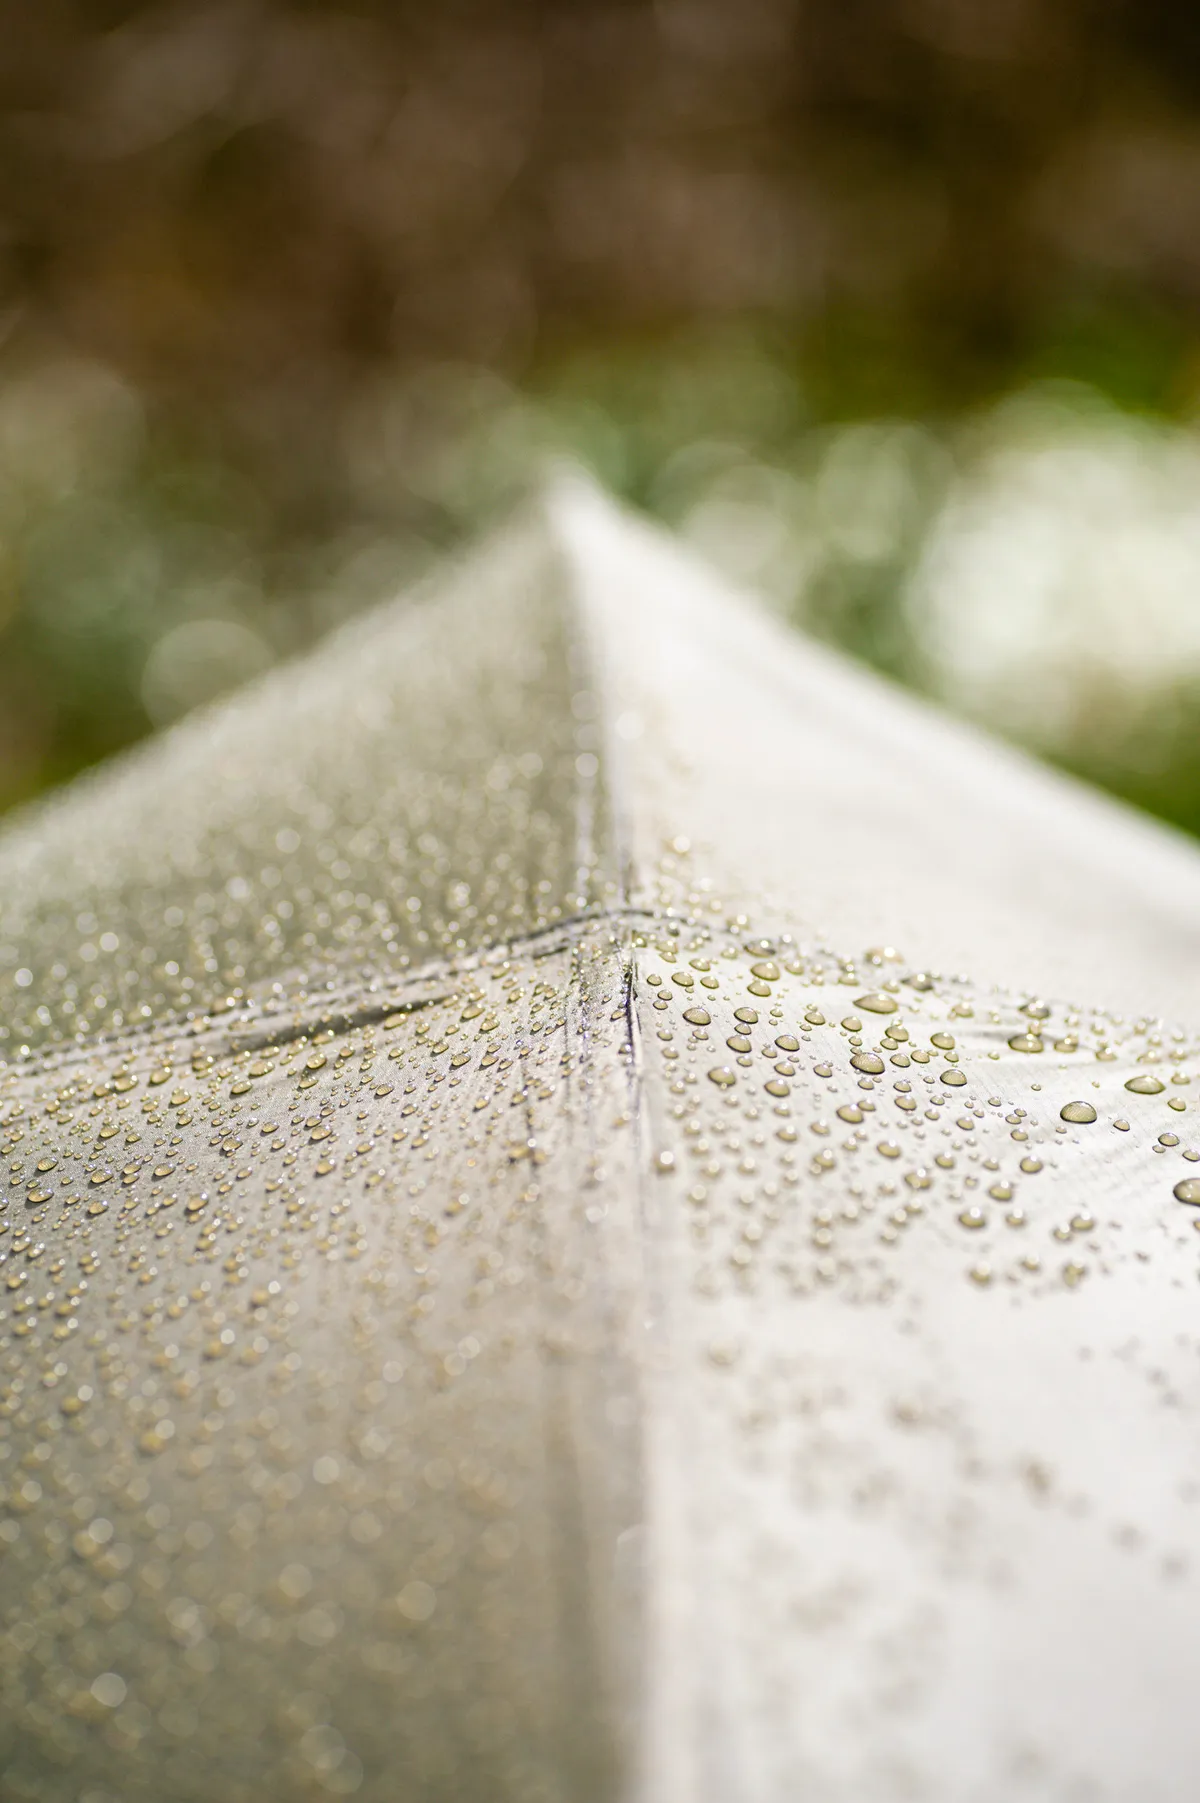 Water beading on a tent flysheet